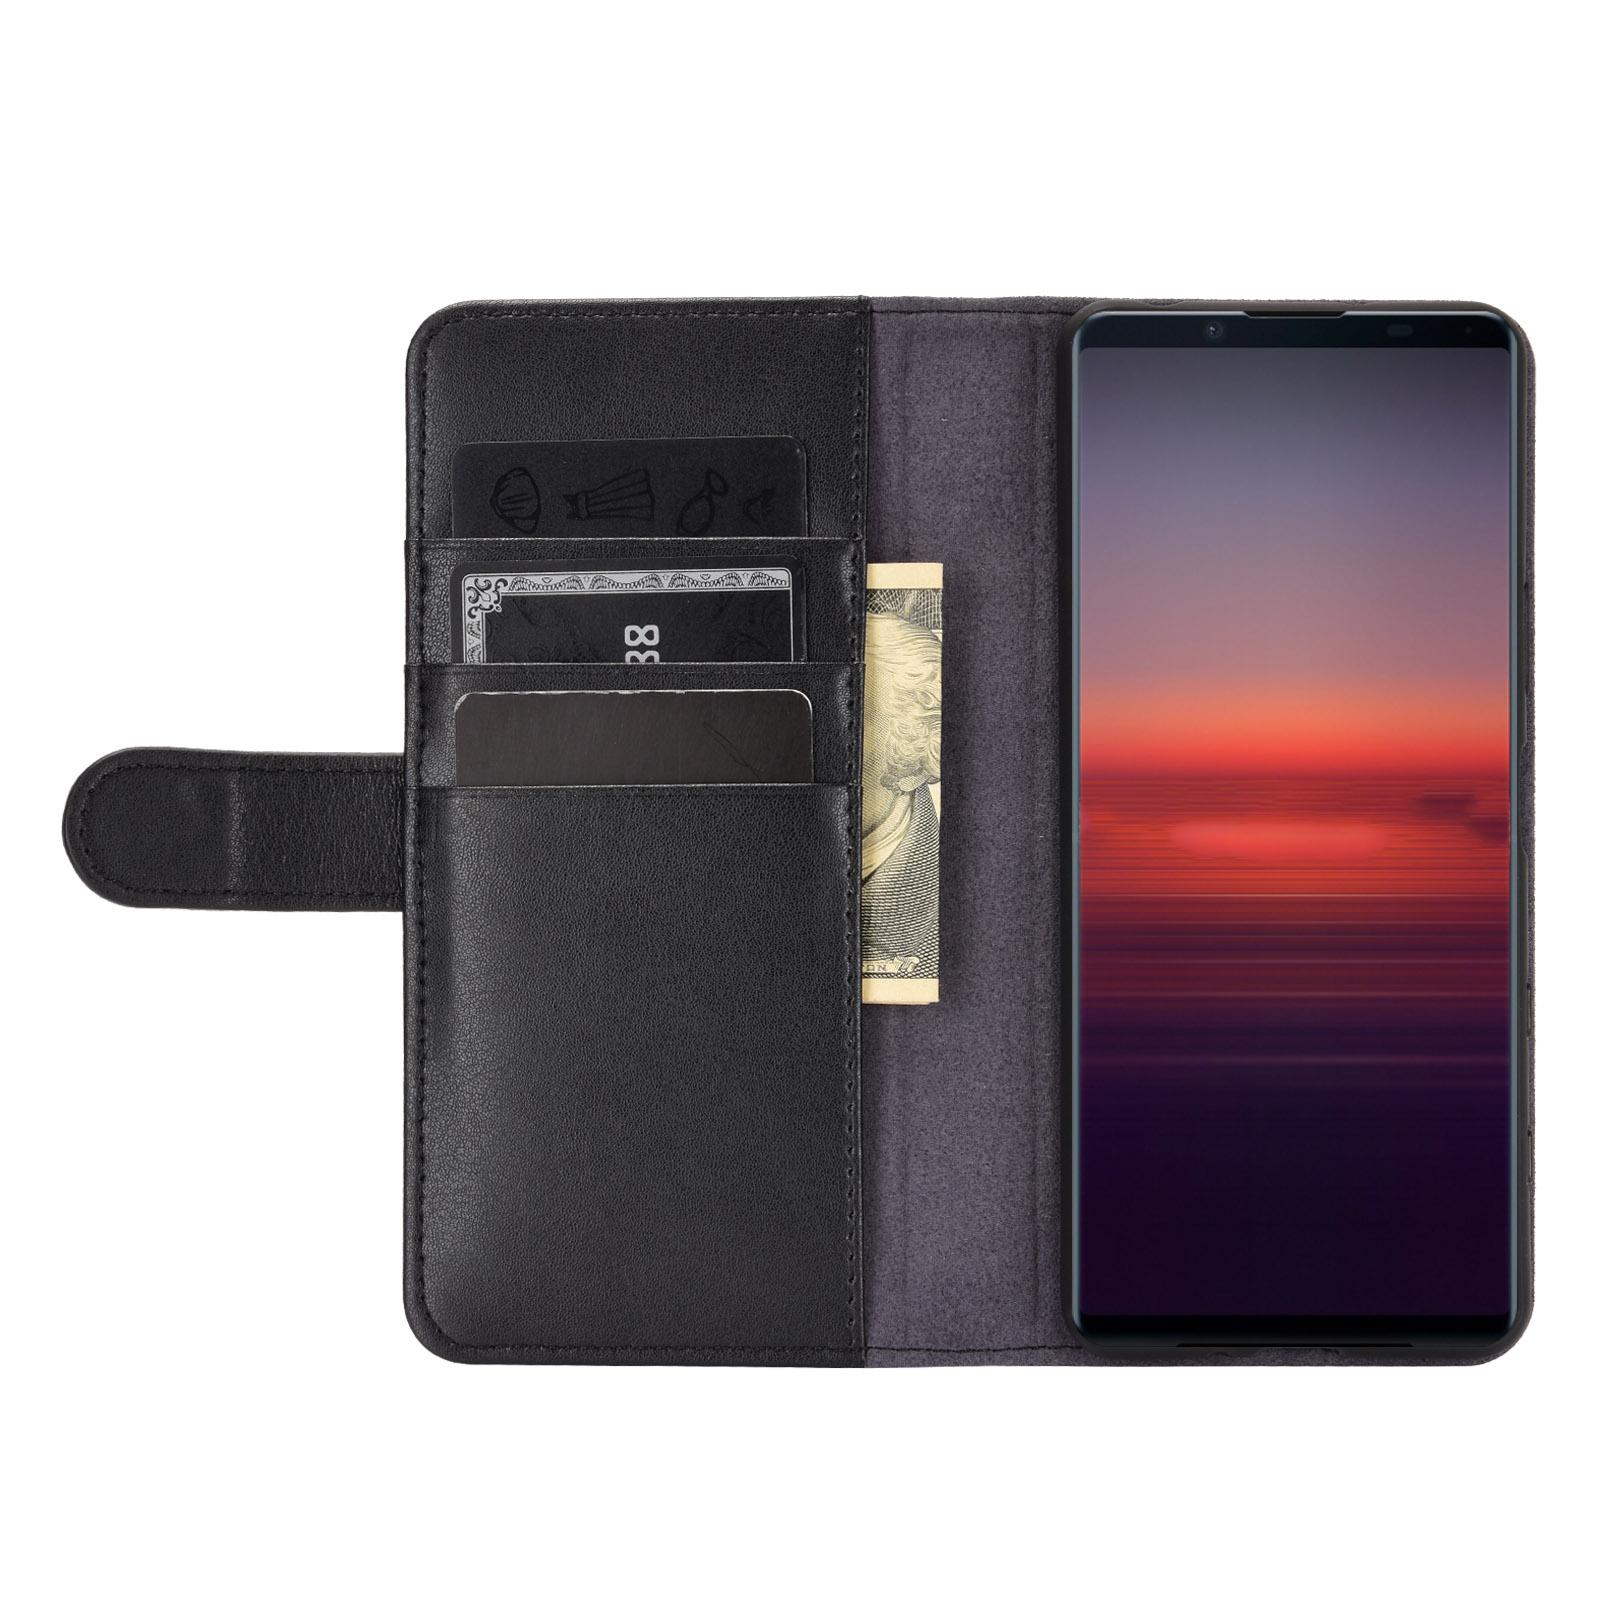 Sony Xperia 5 II Genuine Leather Wallet Case Black